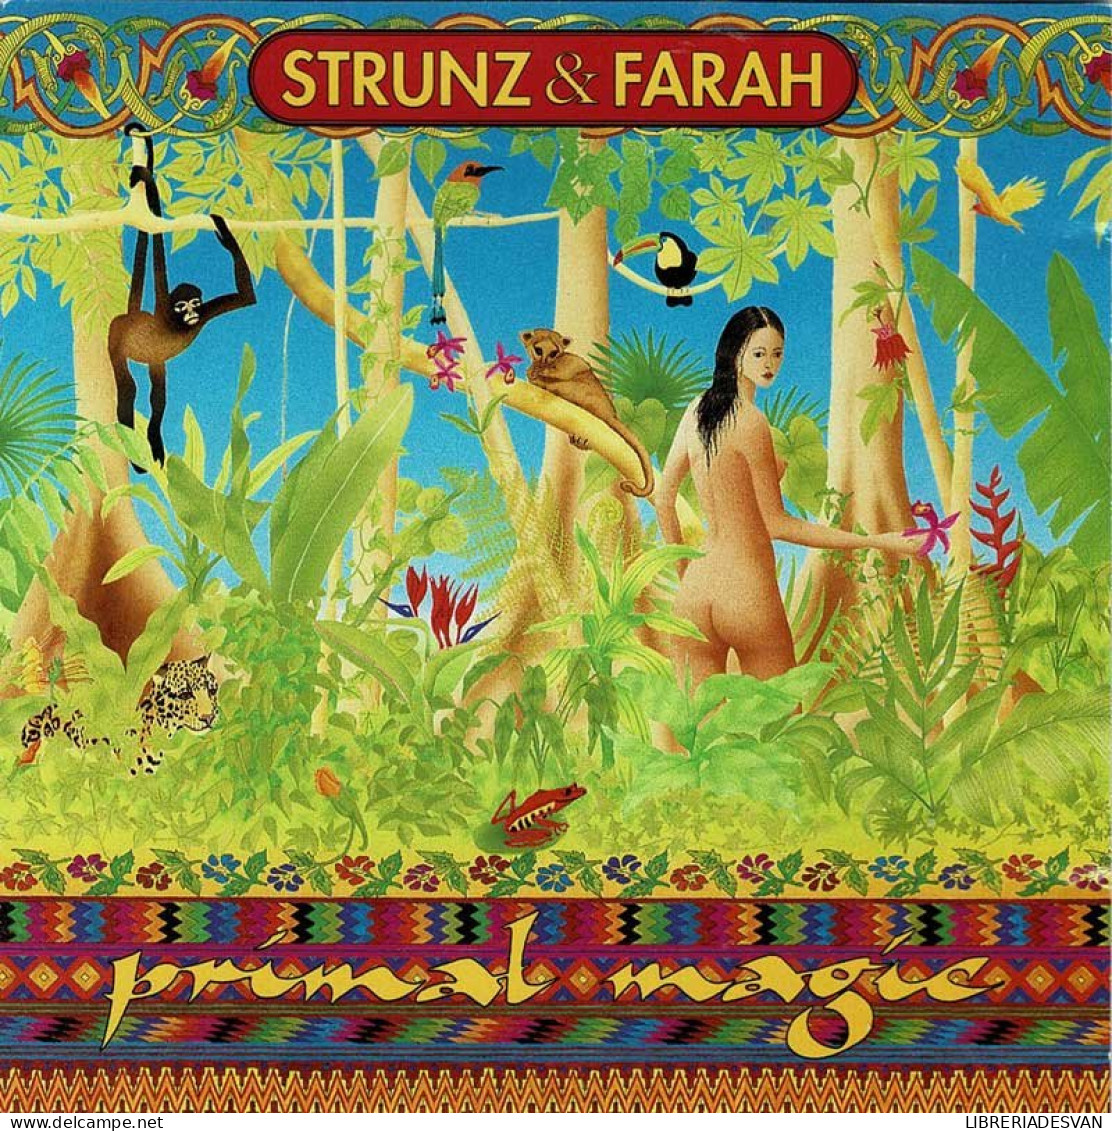 Strunz & Farah - Primal Magic. CD - Other - Spanish Music